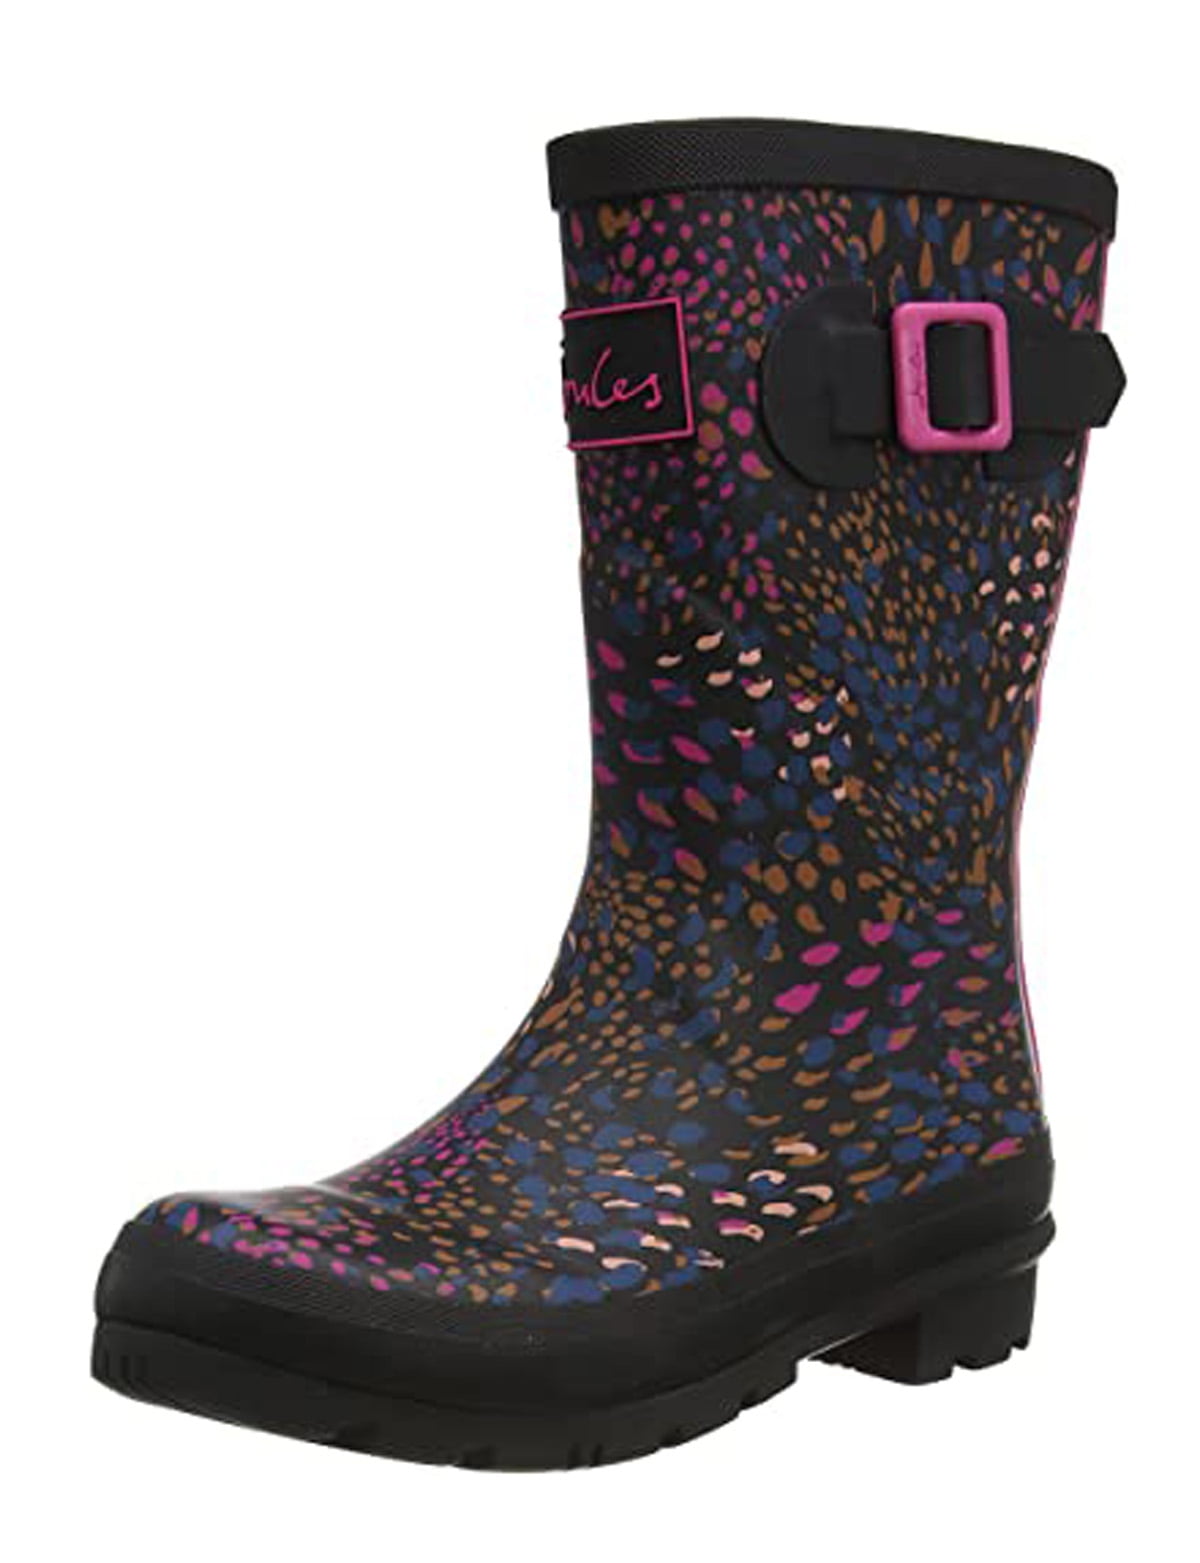 Ladies Booties Shiny Rain Boots SKADOO Size 5-11 Black or Navy Women's Boots 